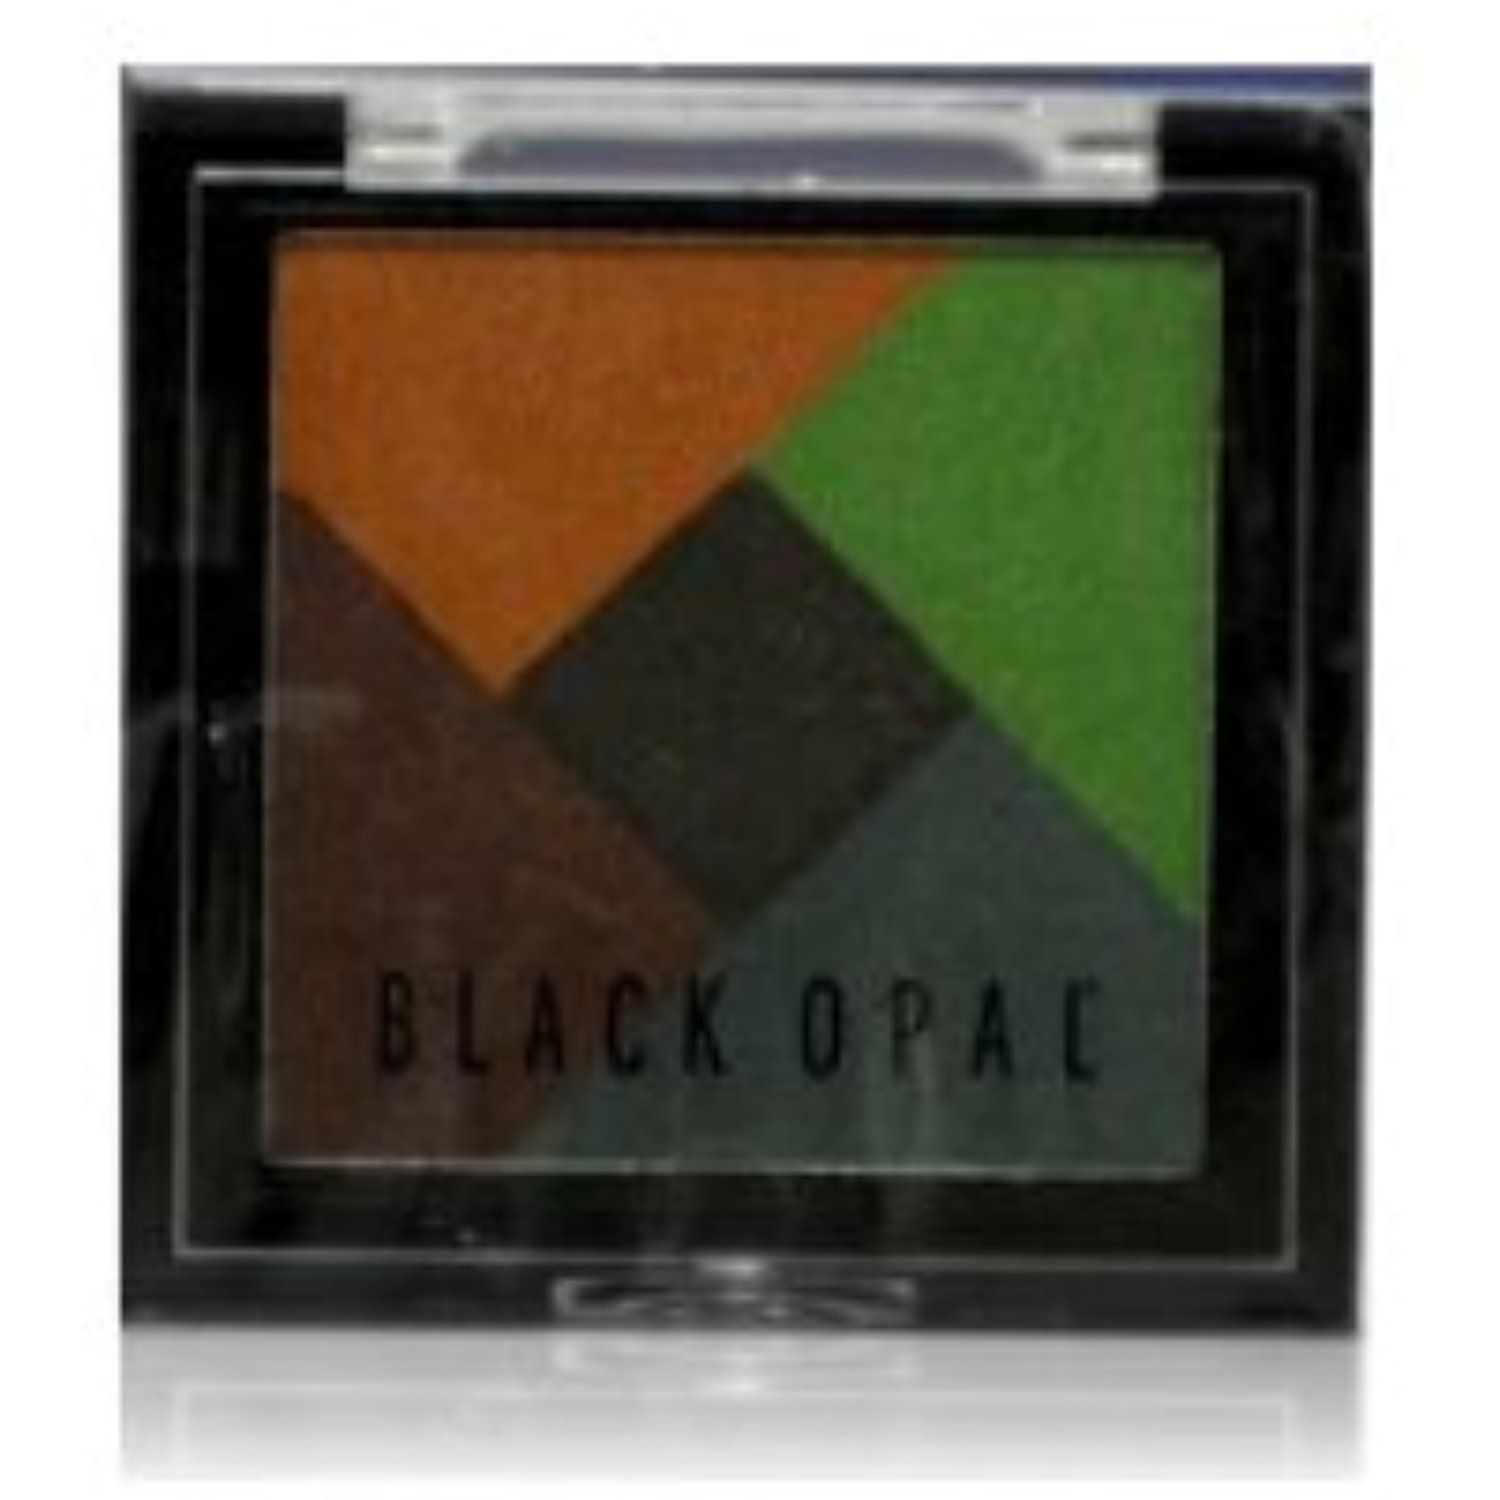 Buy Here - black opal Mosaic Eye Shadow Rain Forest - Allschoolabs Online